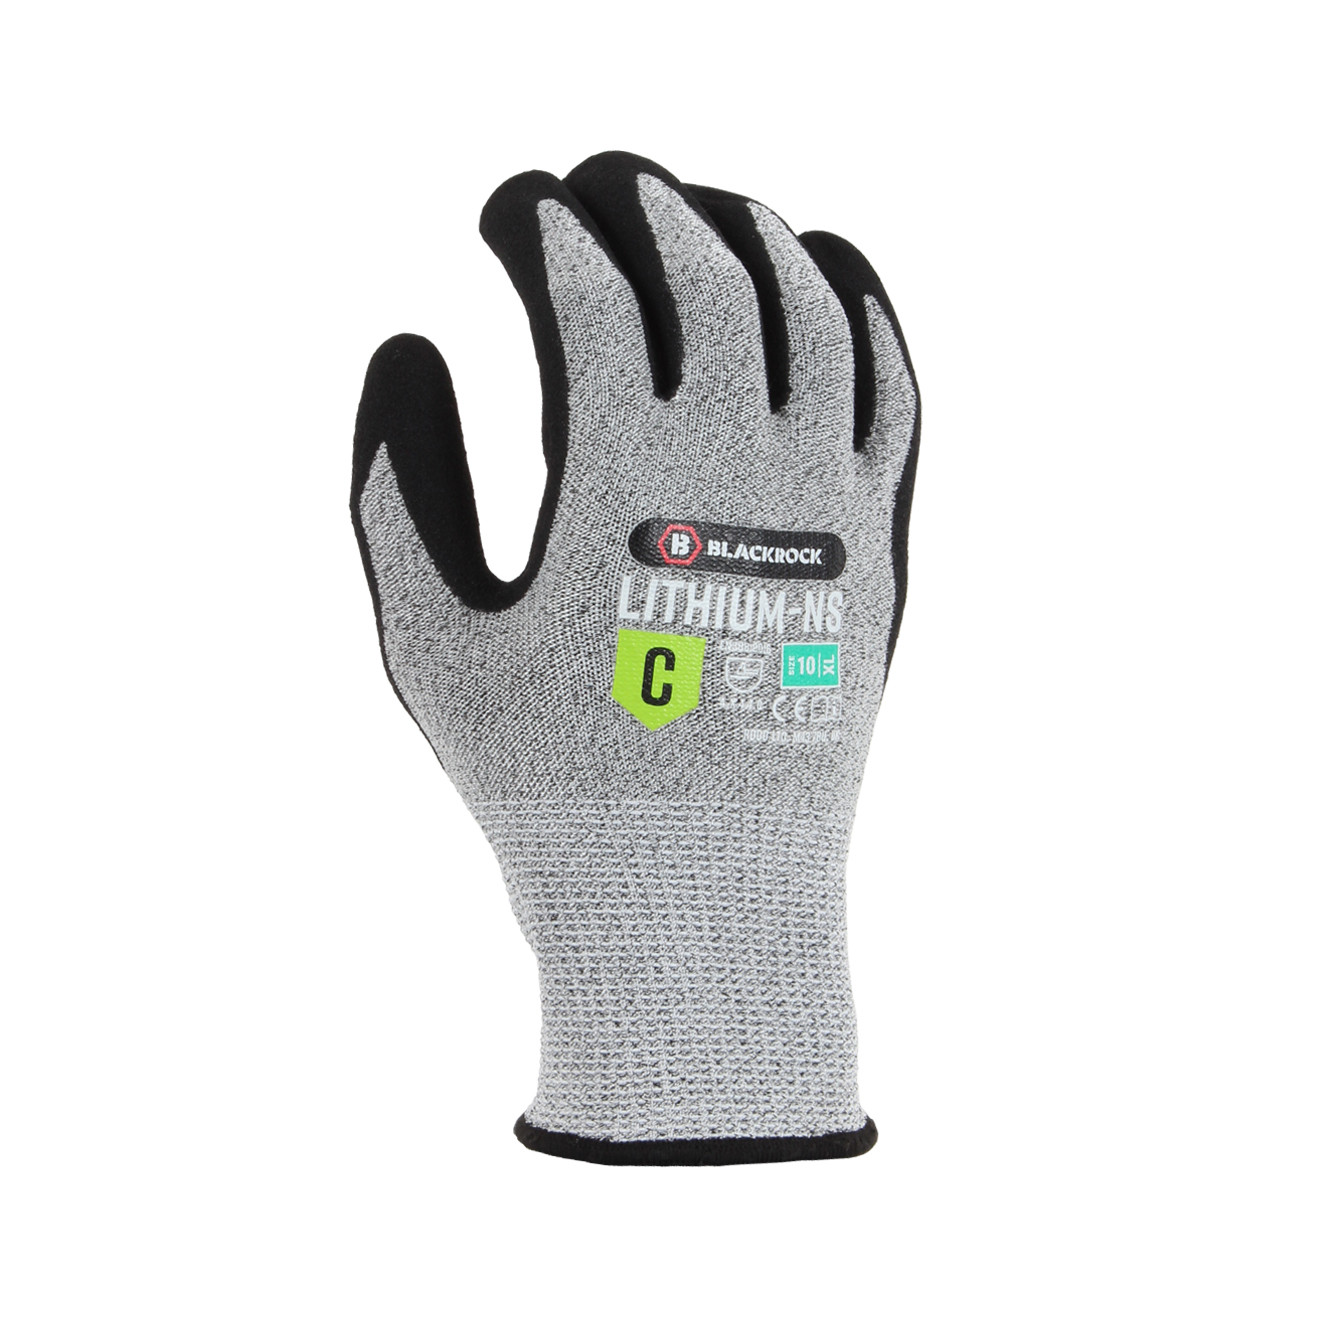 Lithium-NS Cut Resistant Glove